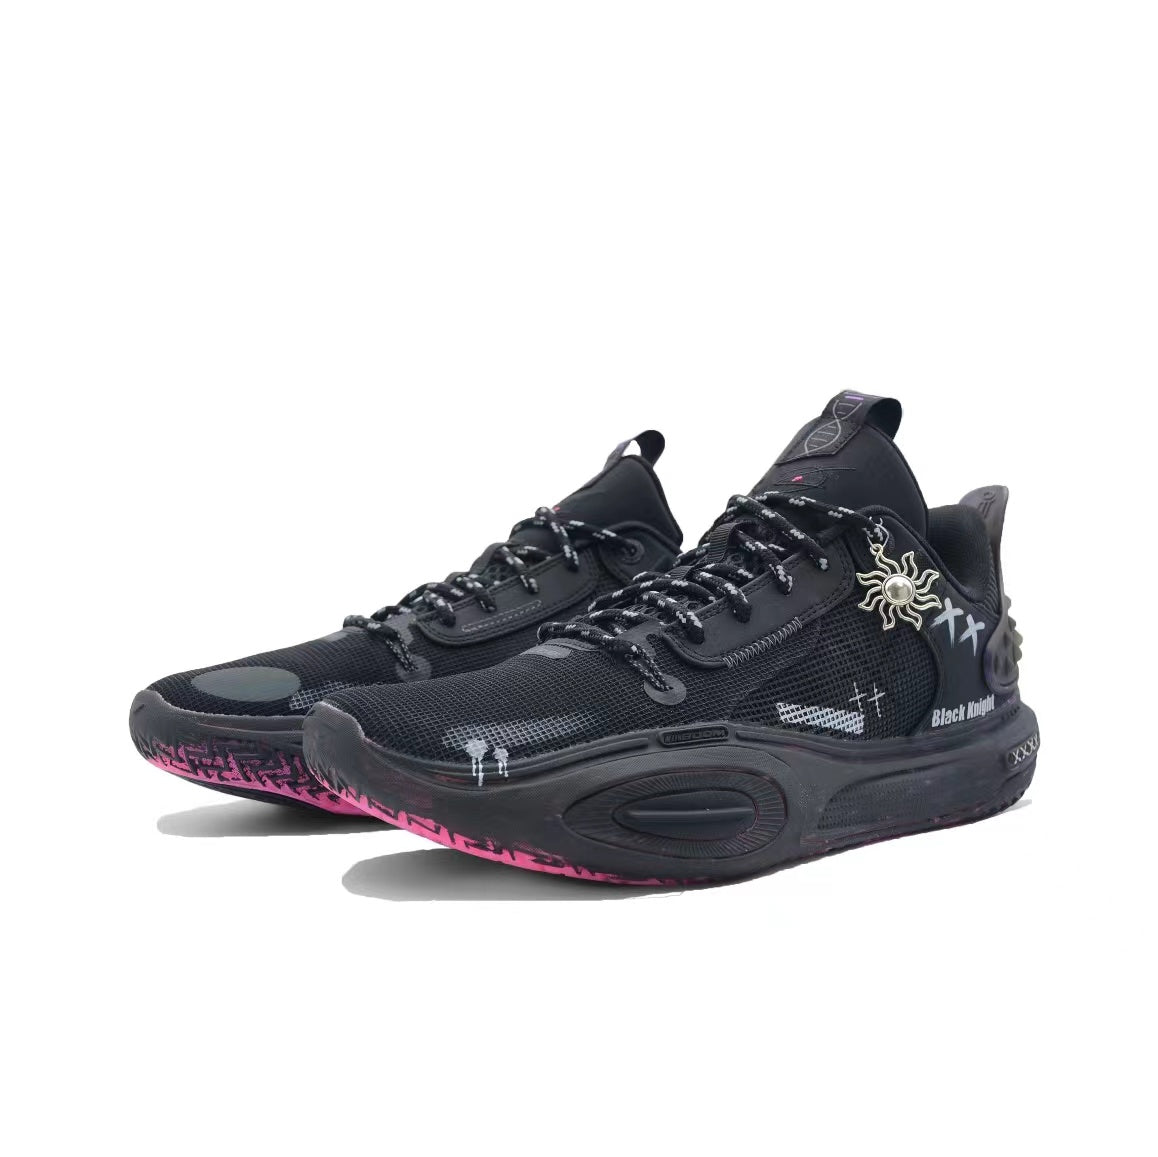 （Custom Sneakers）Li-Ning Wade All City 11 - Black Warrior